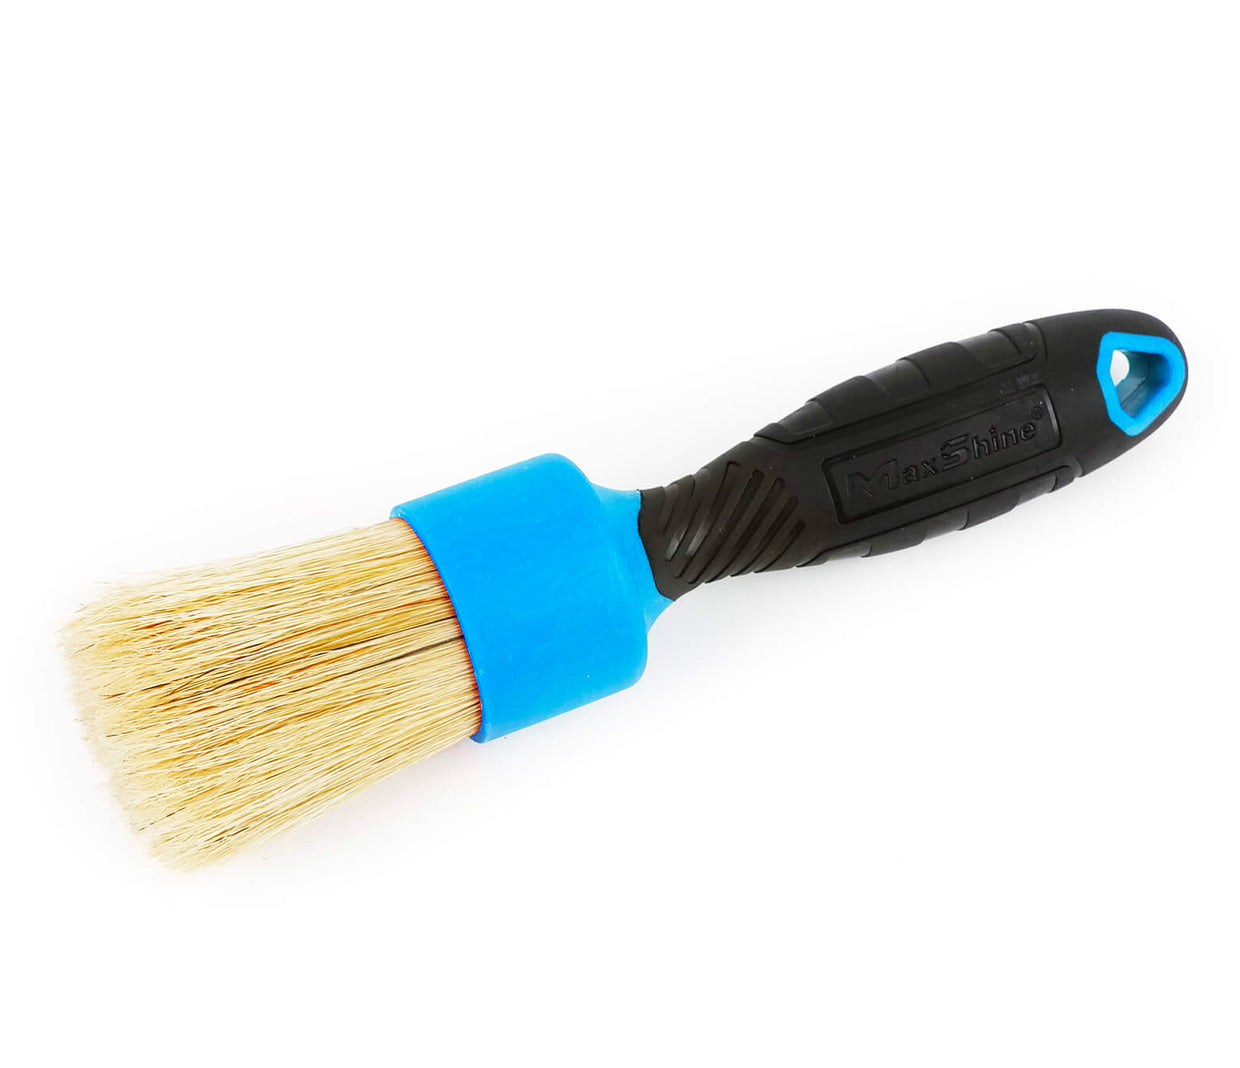 Maxshine Natural Boars Hair Detailing Stubby Brush - Blue